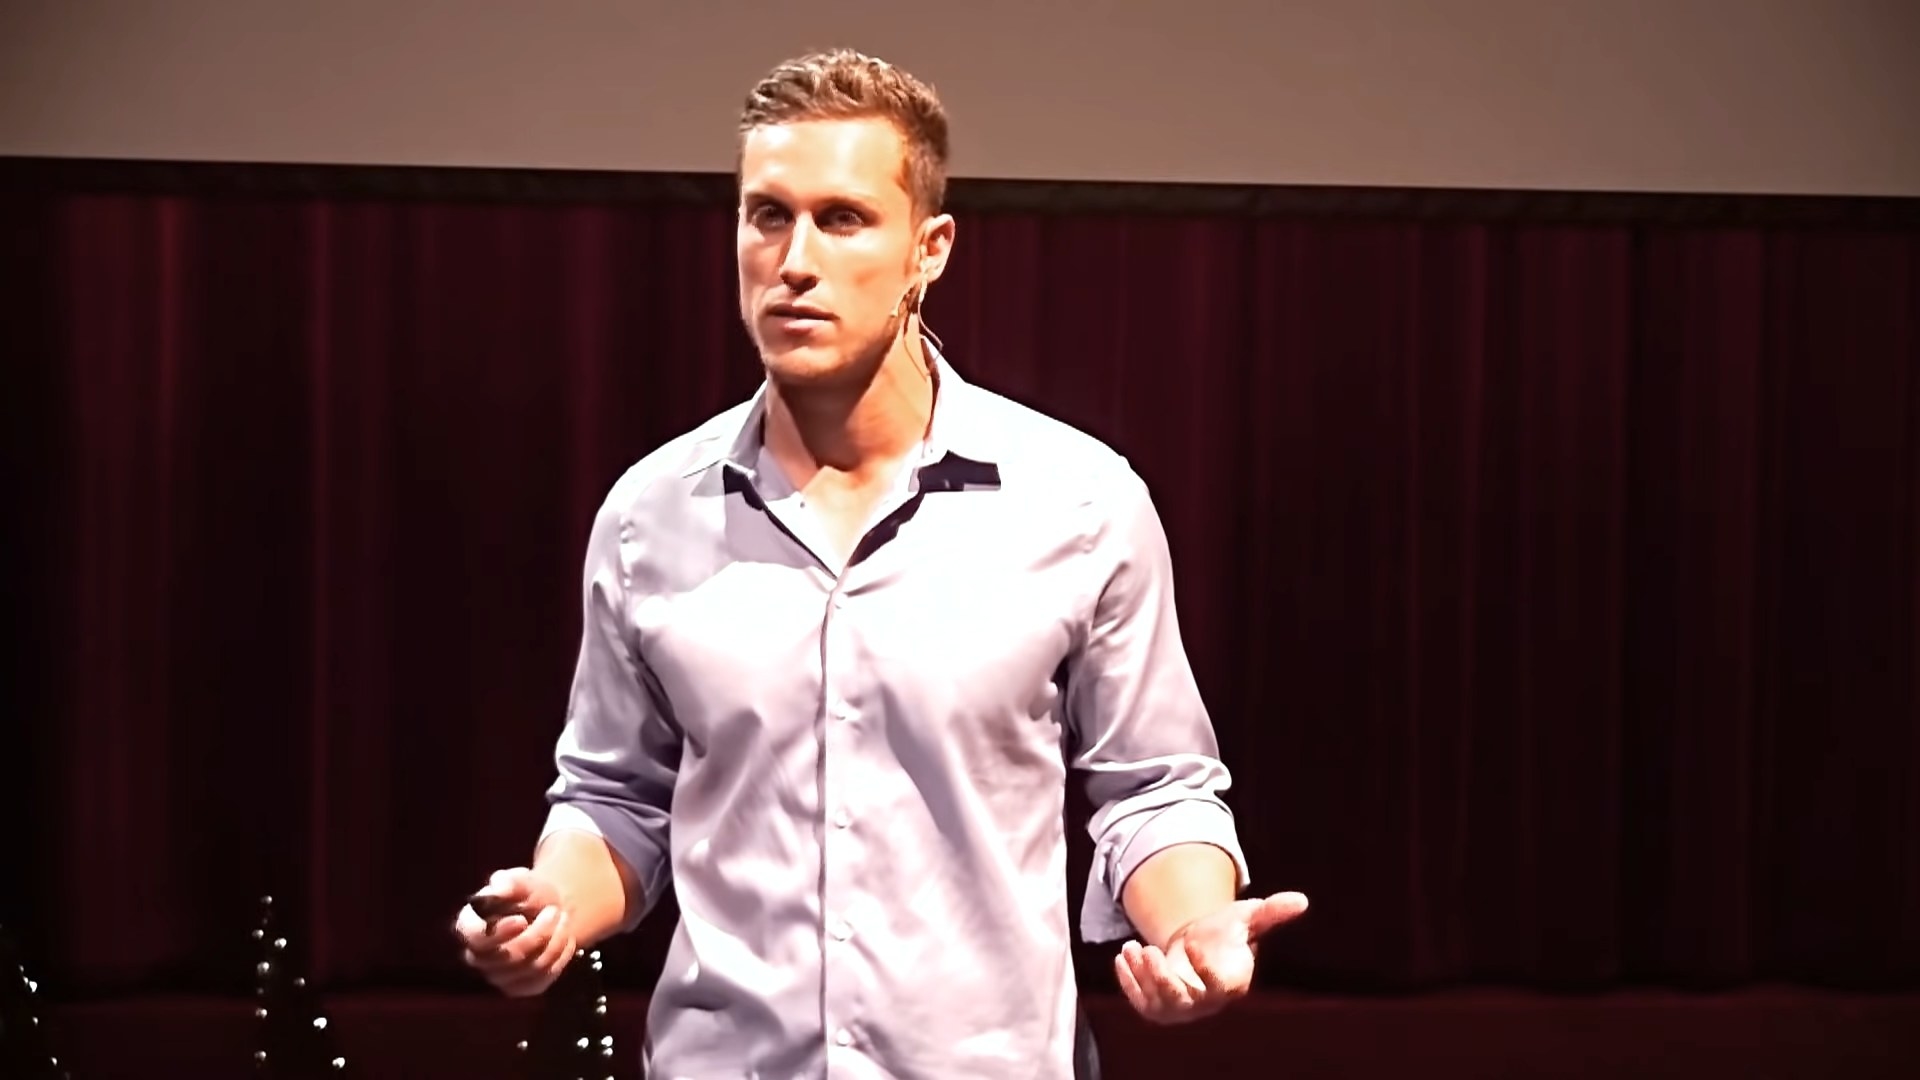 David Shad gives a TEDx talk